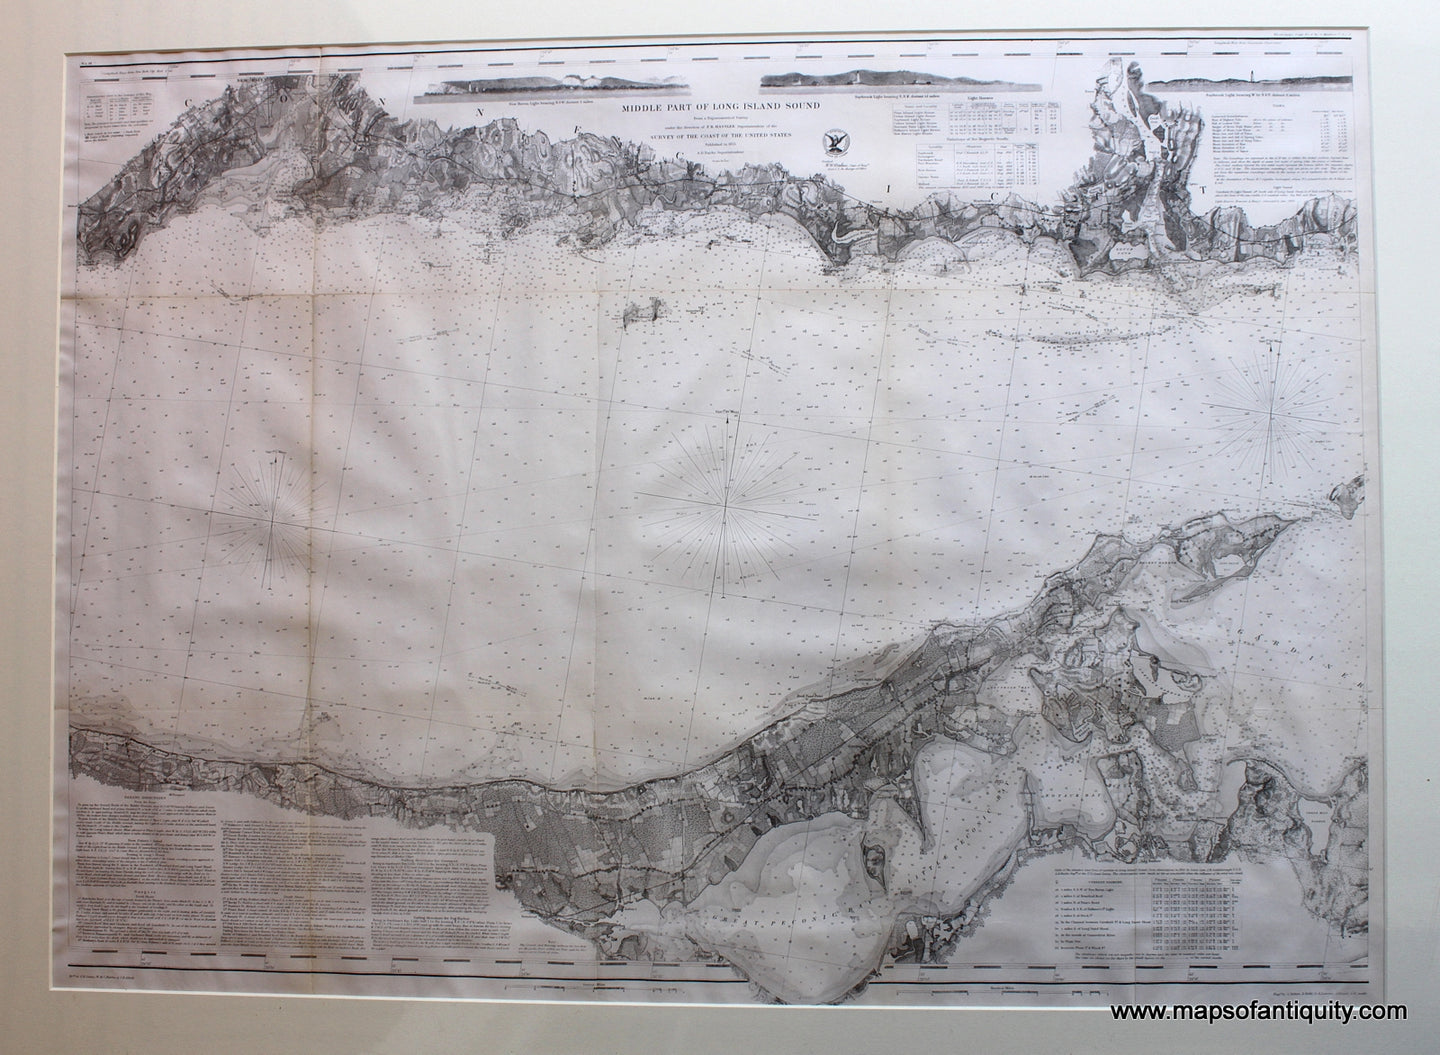 Black-and-White-Antique--Nautical-Chart-Middle-Part-of-Long-Island-Sound**********-United-States-Northeast-1855-U.S.-Coast-Survey-Maps-Of-Antiquity